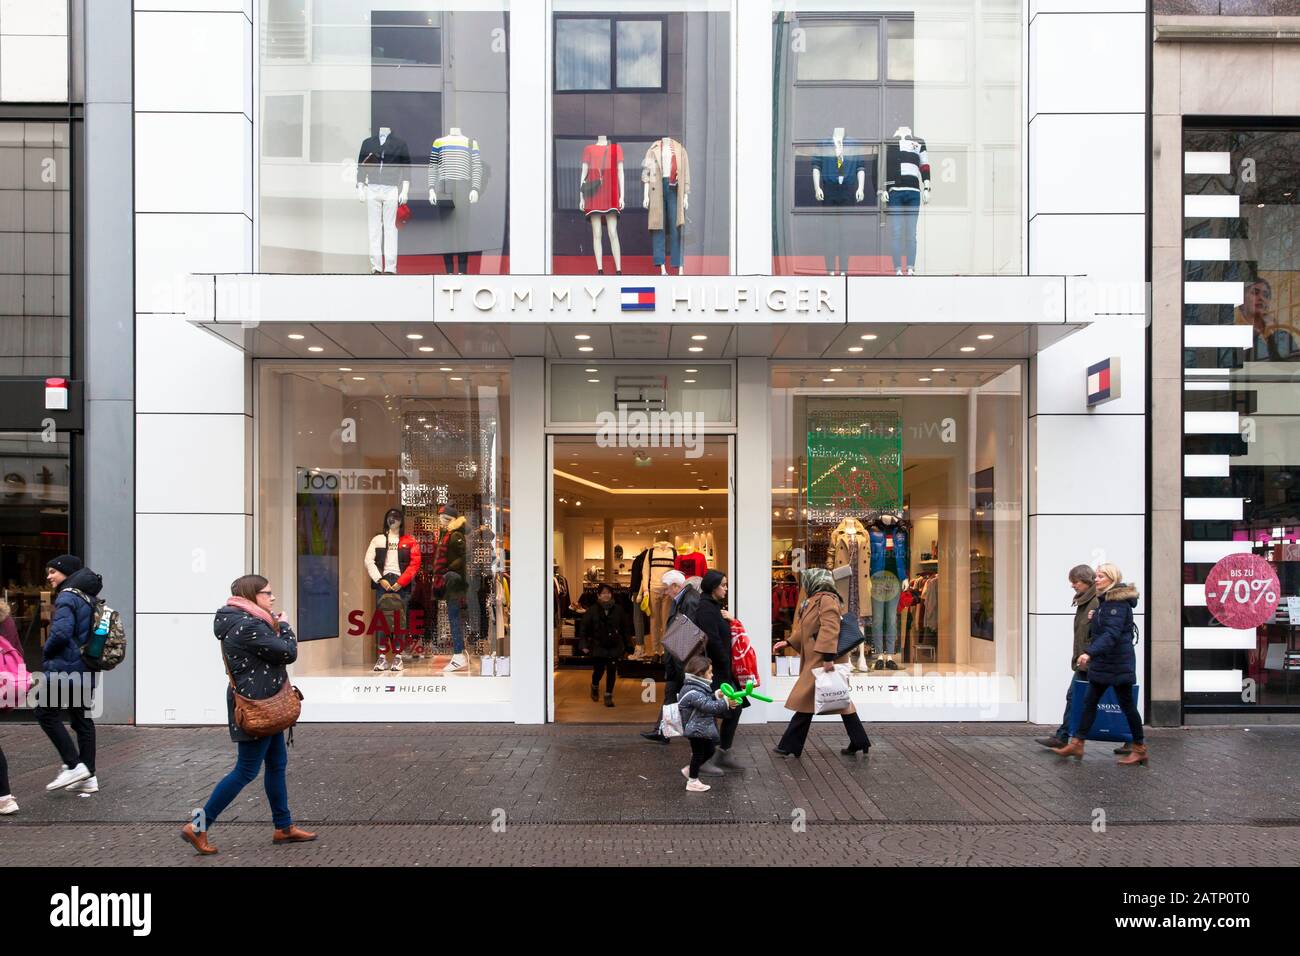 fashion store Tommy Hilfiger on shopping street Schildergasse, Cologne,  Germany. Modegeschaeft Tommy Hilfiger in der Einkaufsstrasse Schildergasse,  K Stock Photo - Alamy